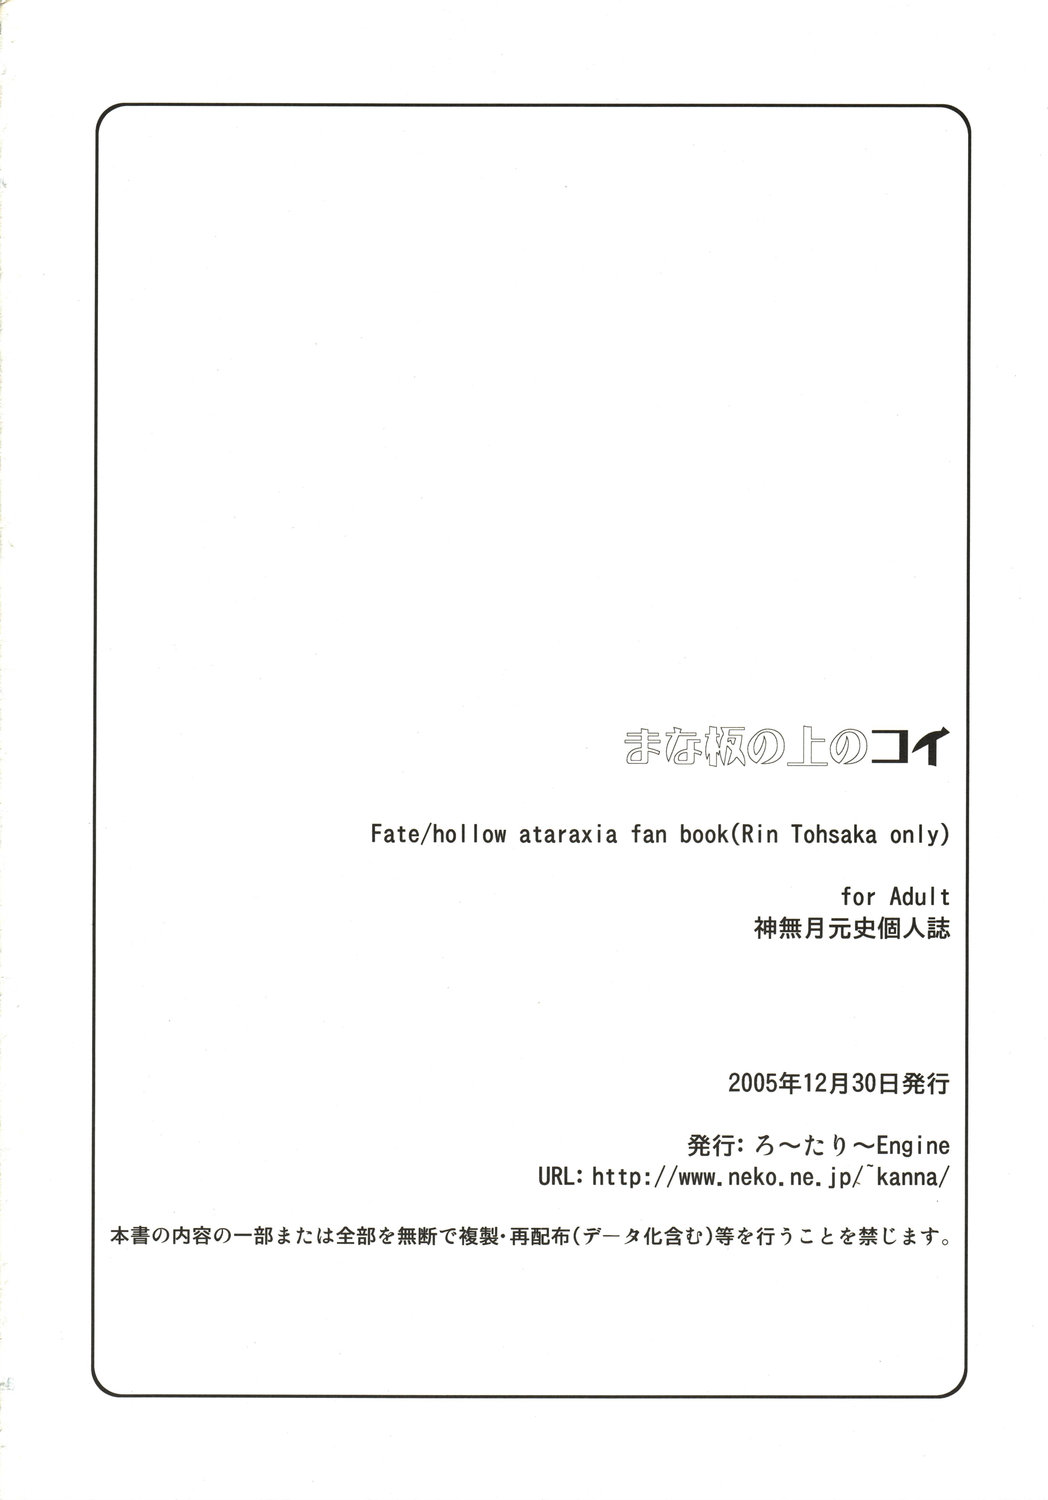 [Rotary Engine] Tohsaka fanbook (Fate/Hollow ataraxia) 